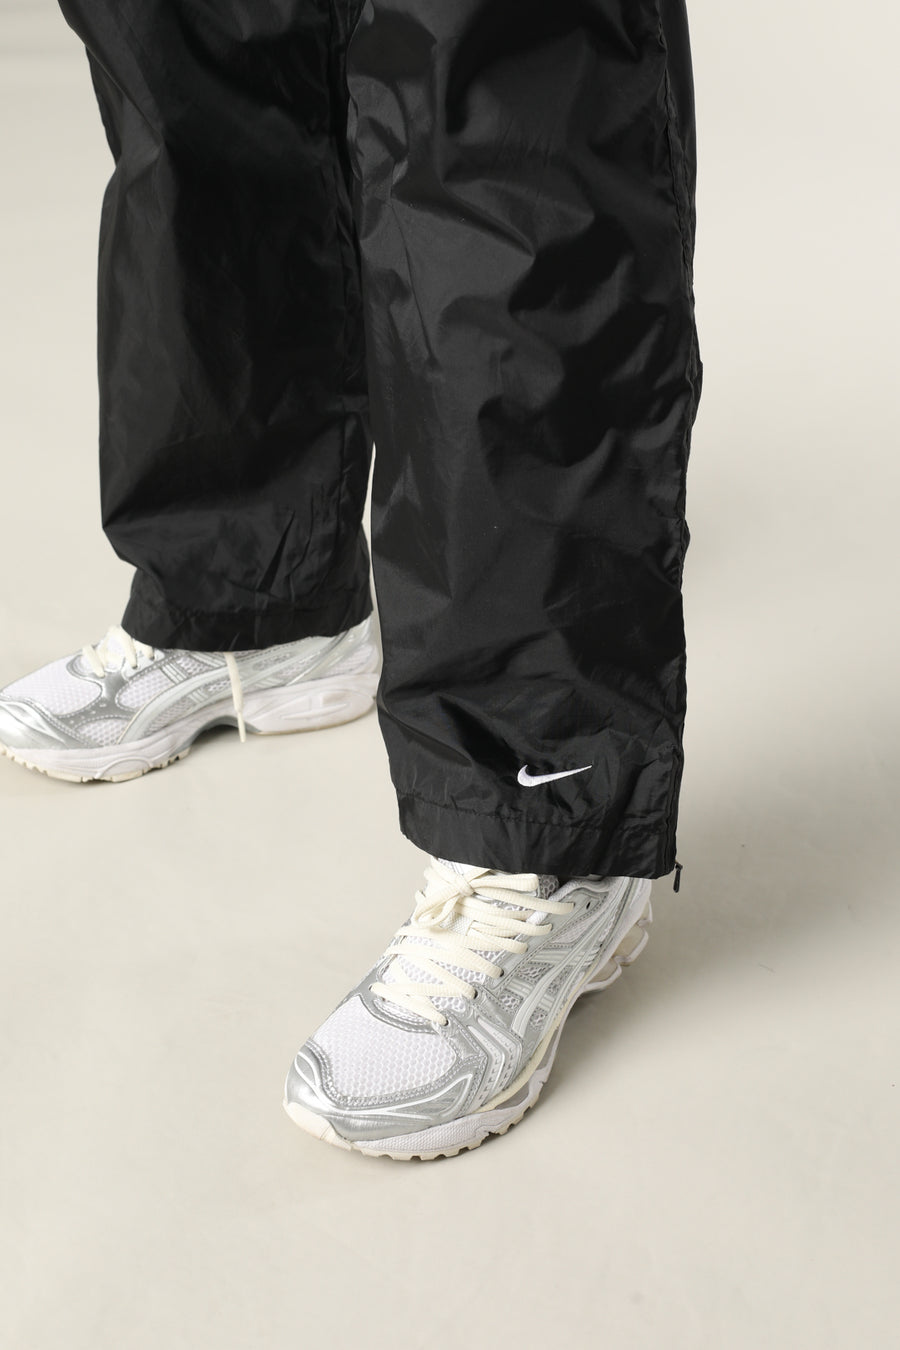 Vintage Nike Nylon Track Pants